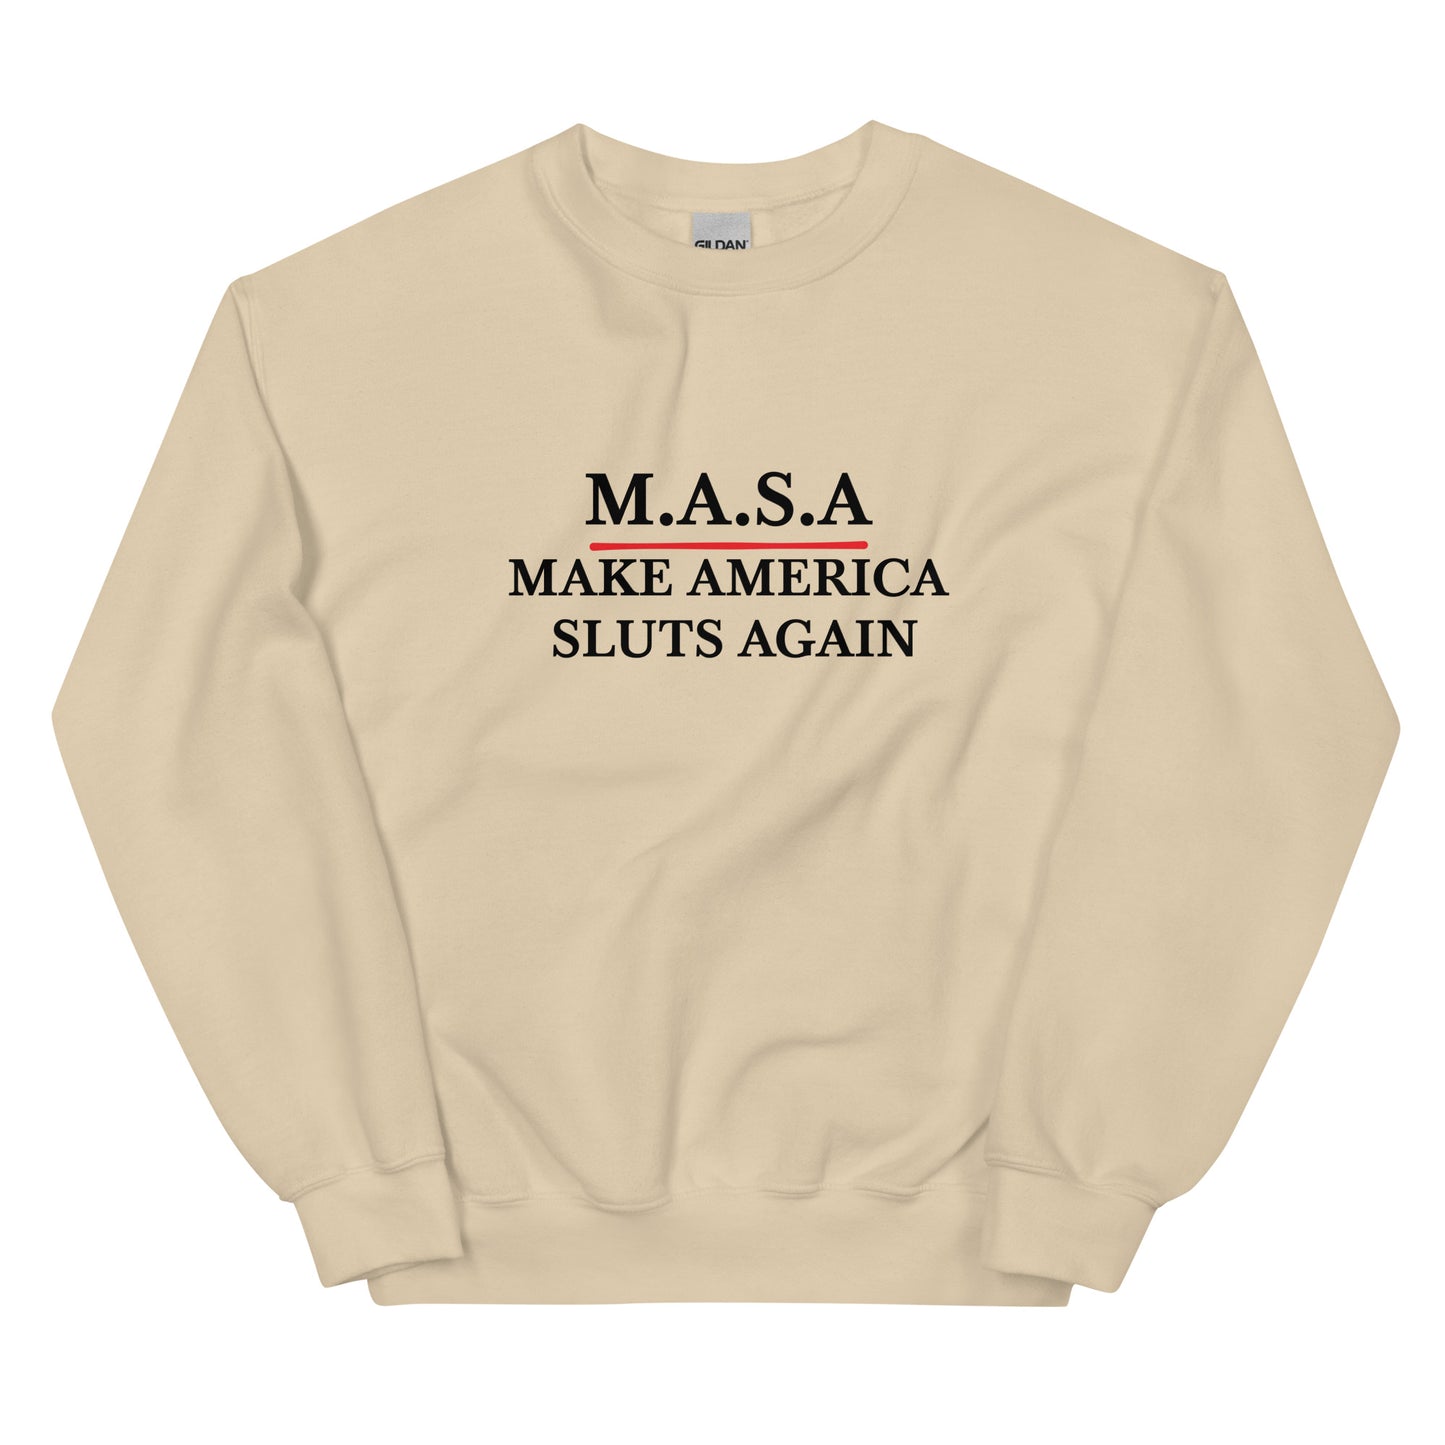 MAKE AMERICA SLUTS AGAIN sweatshirt